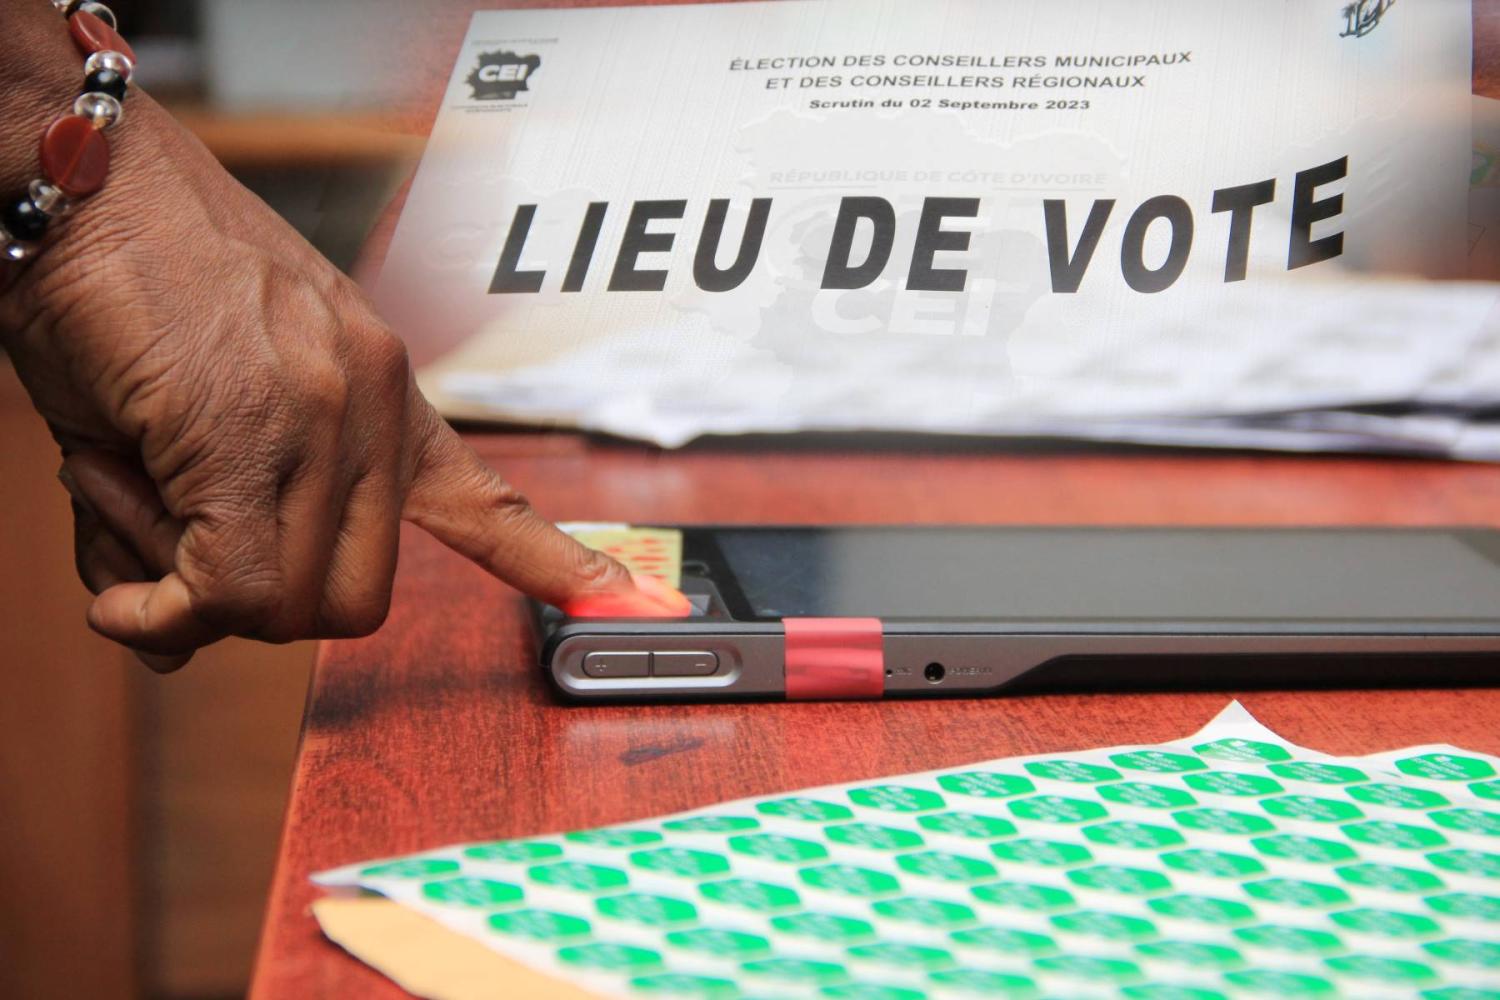 A citizen registers their vote. (Photo credit: Doumbia Moussa / Shutterstock)